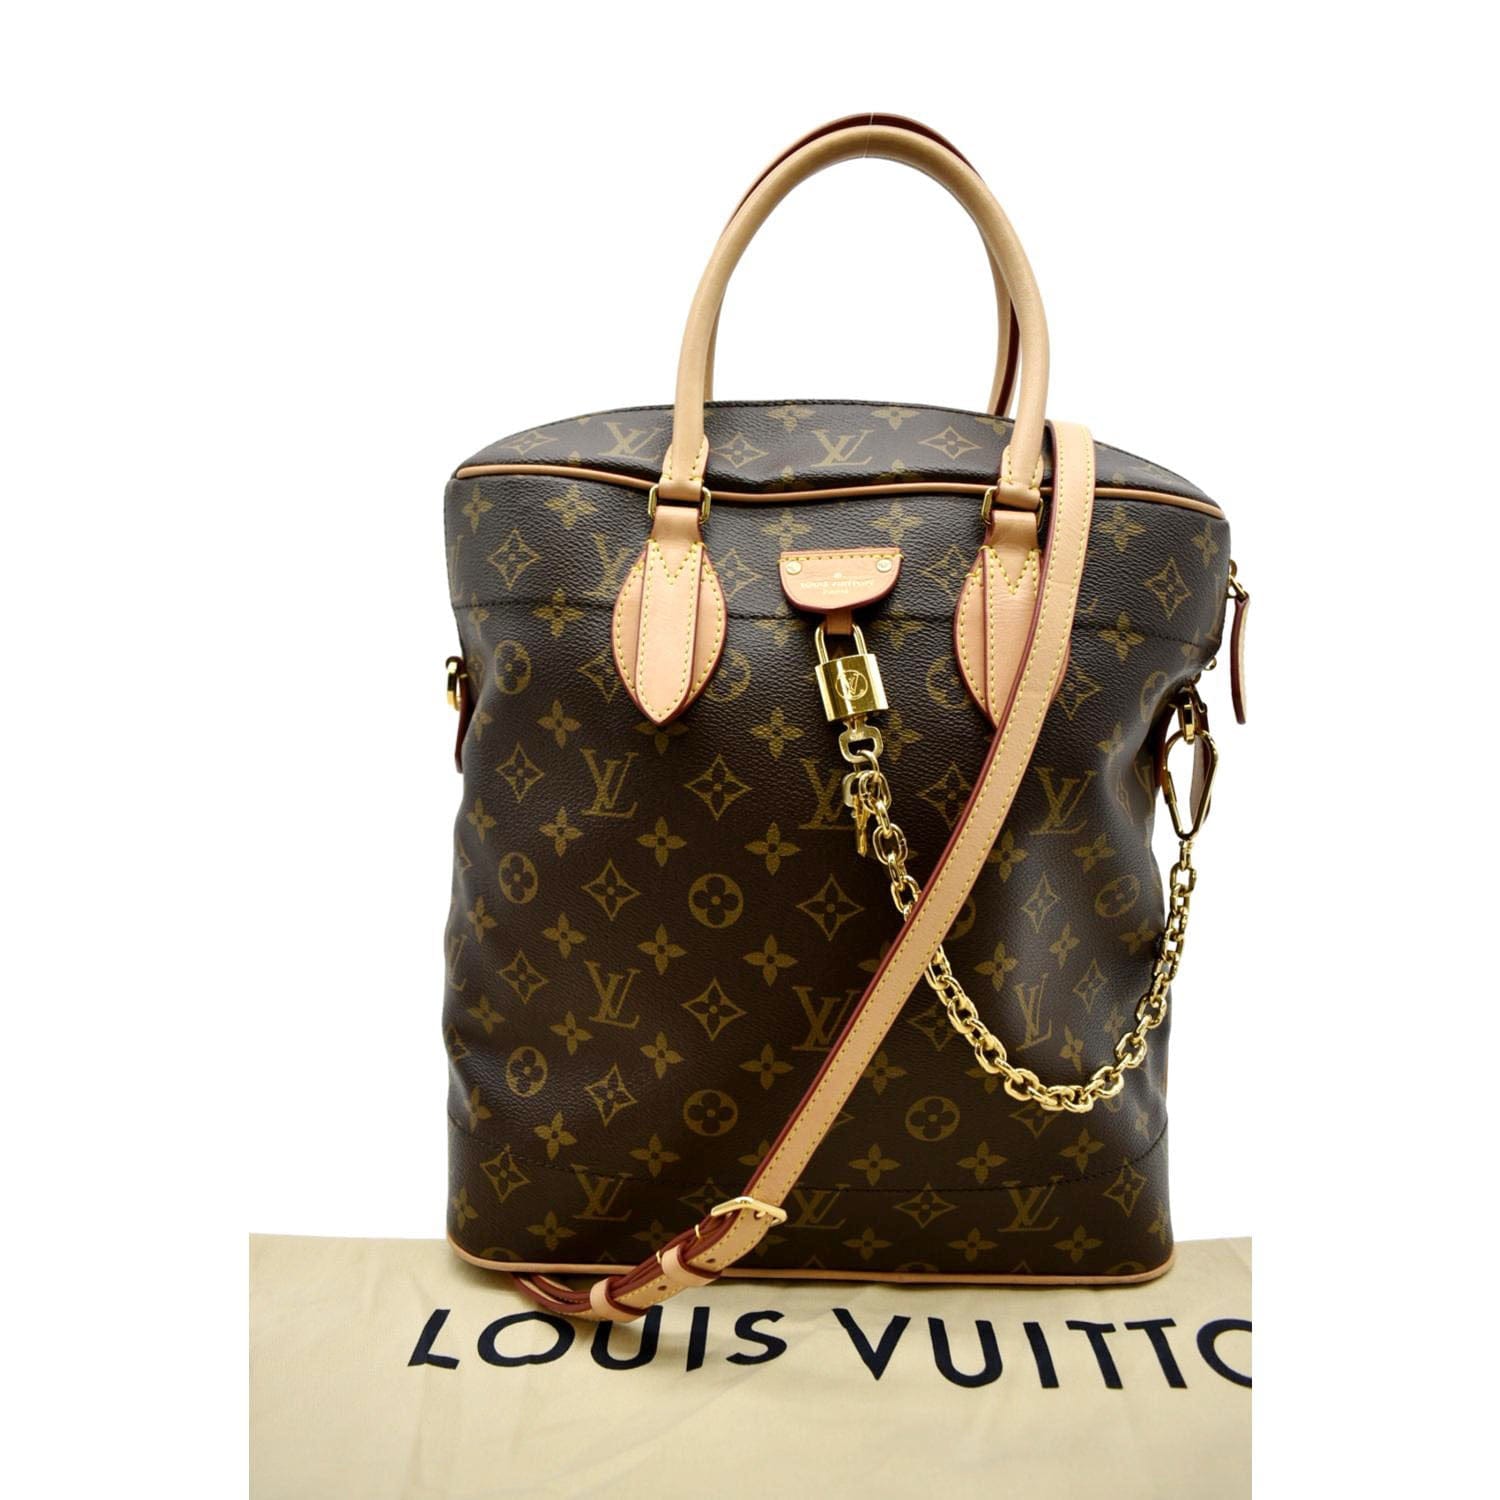 Louis Vuitton Carryall mm Monogram